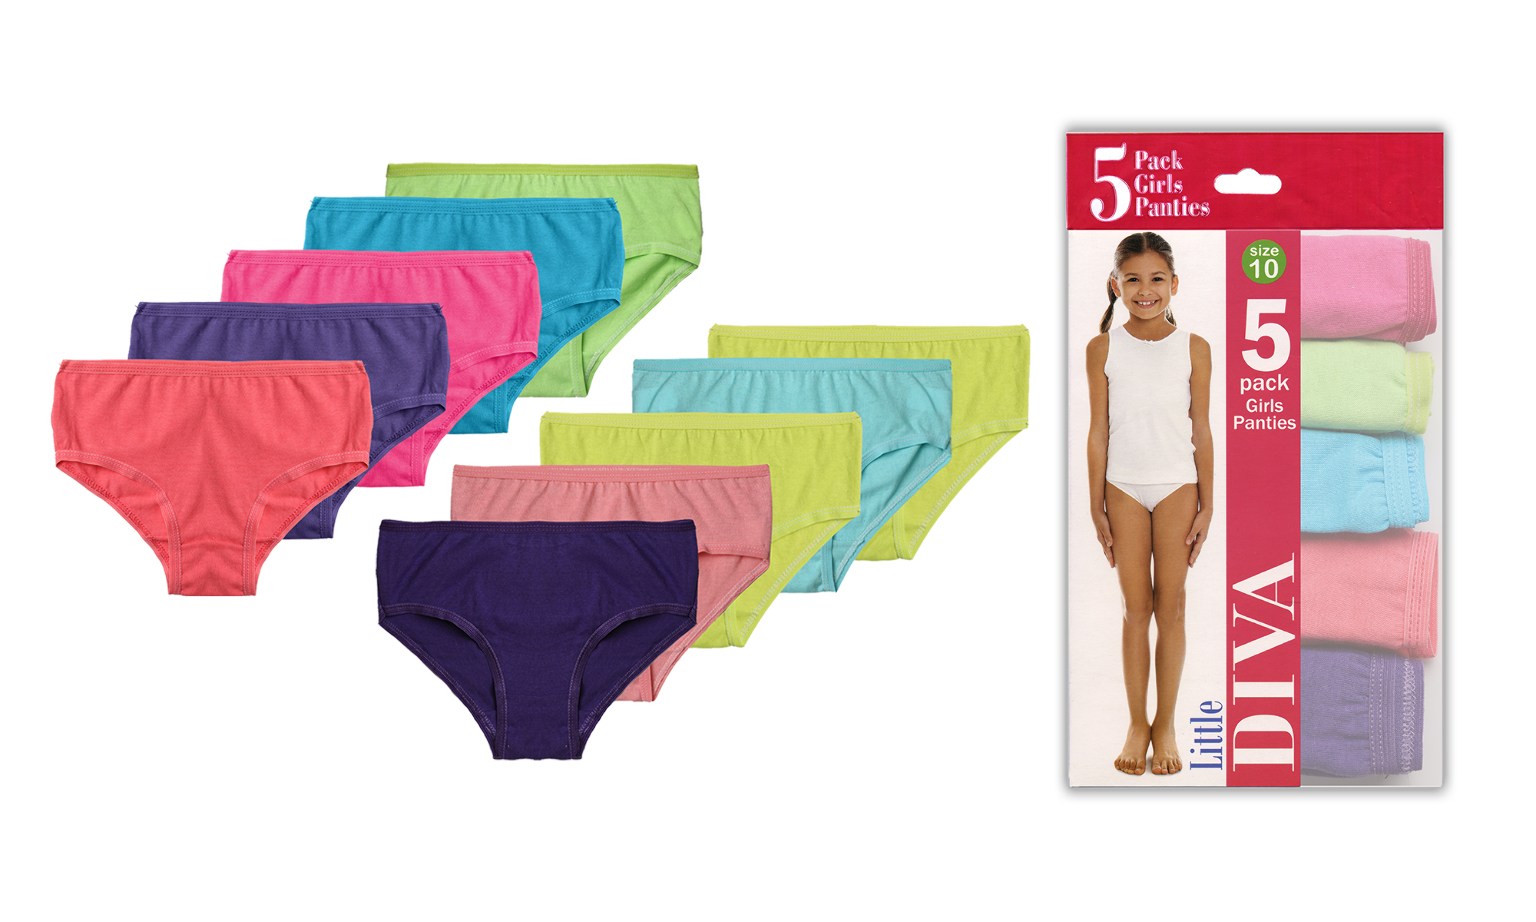 Fruit of the Loom Girls' Cotton Brief Underwear, 10 Pack Panties, Sizes 4-16